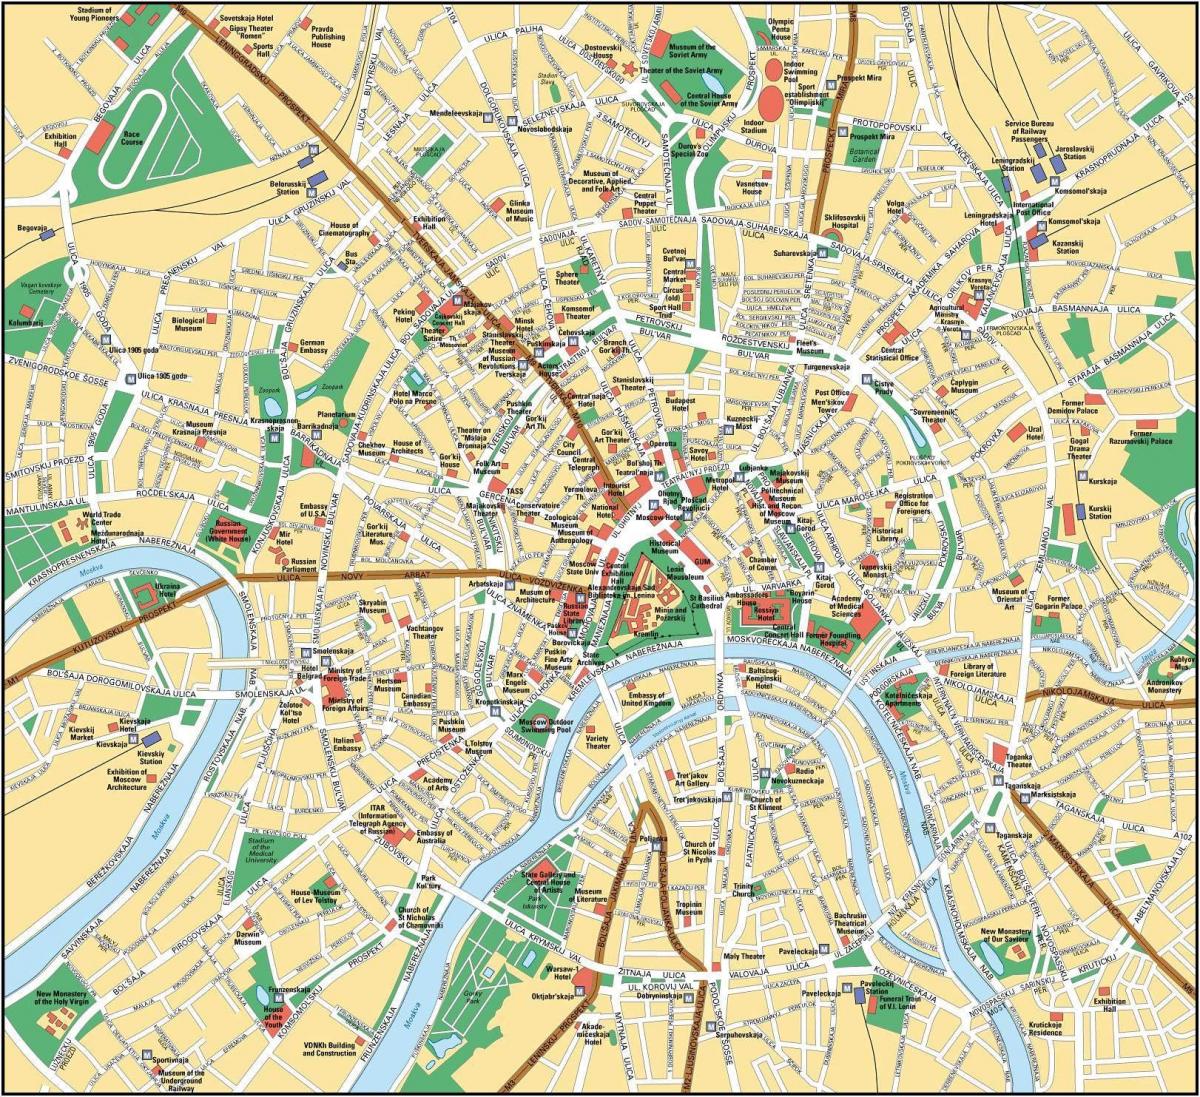 Moskva гудамжны газрын зураг